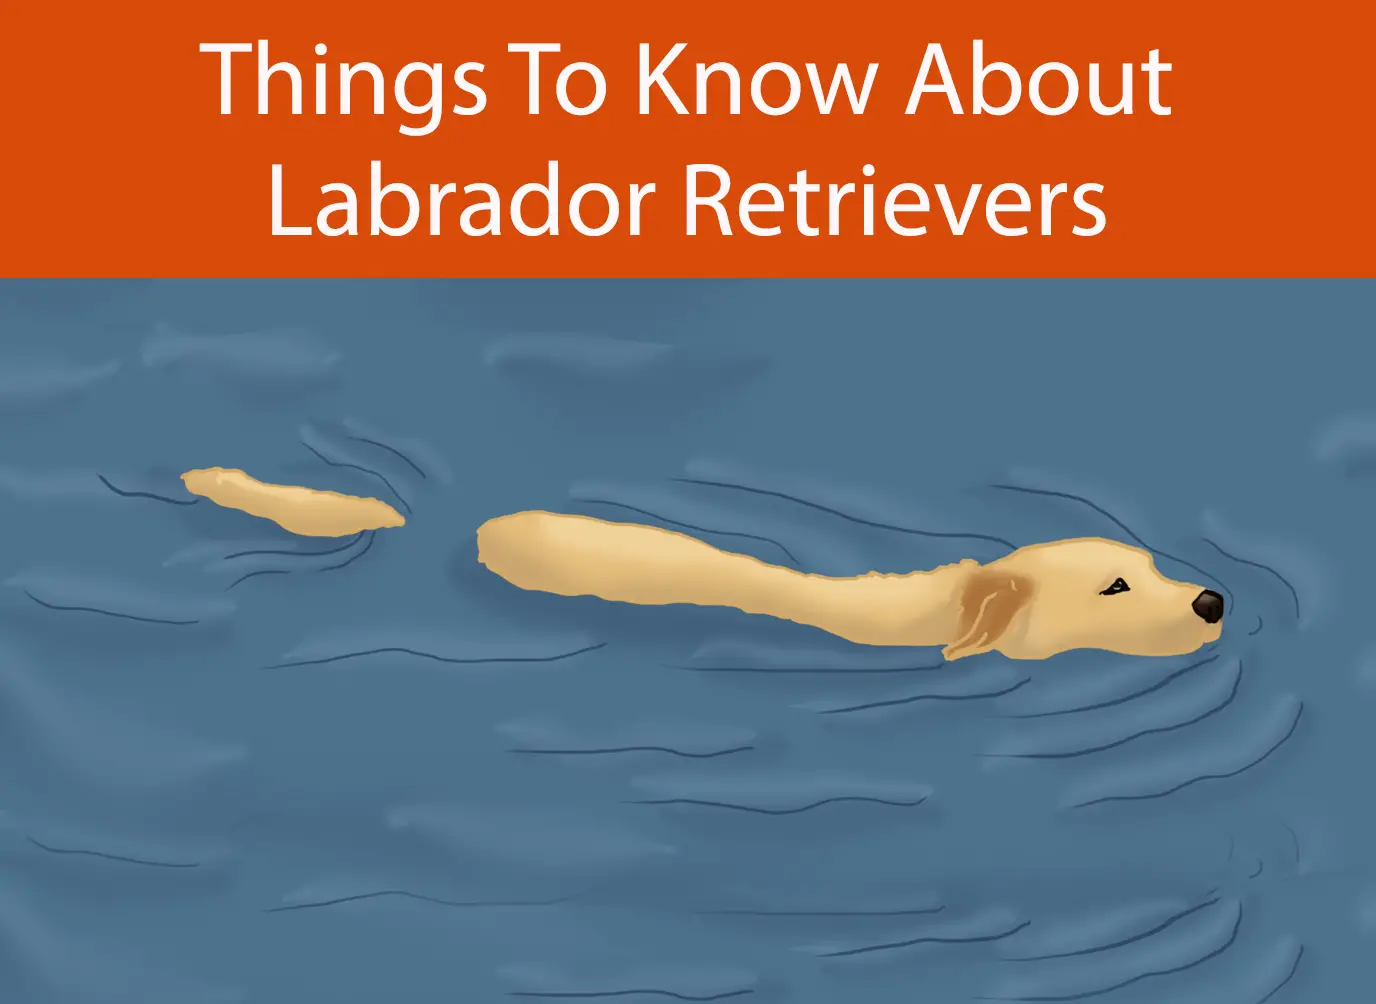 Things To Know About Labrador Retrievers